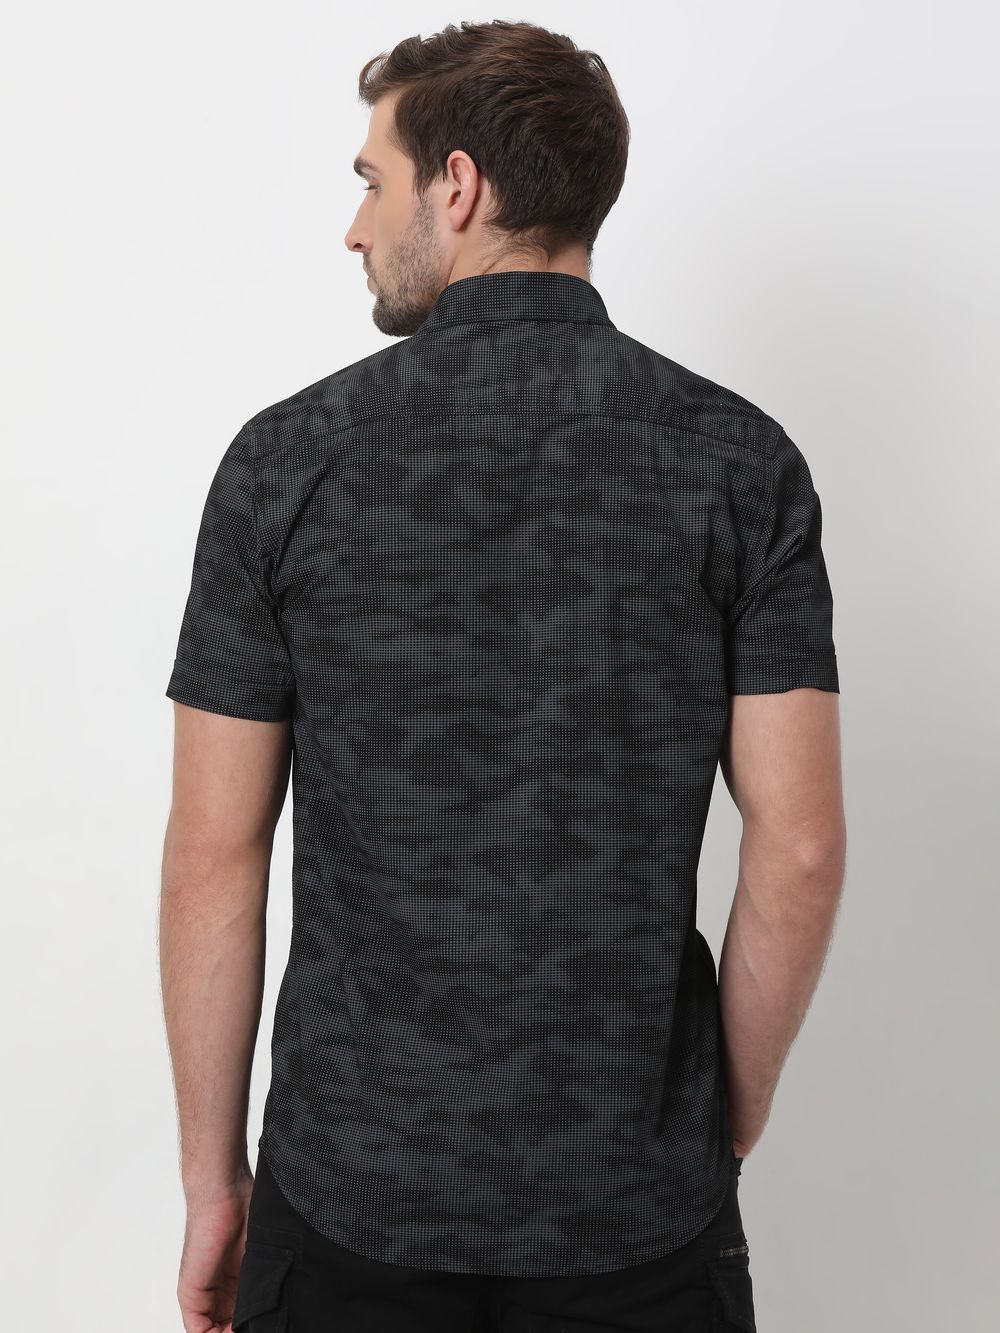 Black & Grey Camo Print Slim Fit Casual Shirt